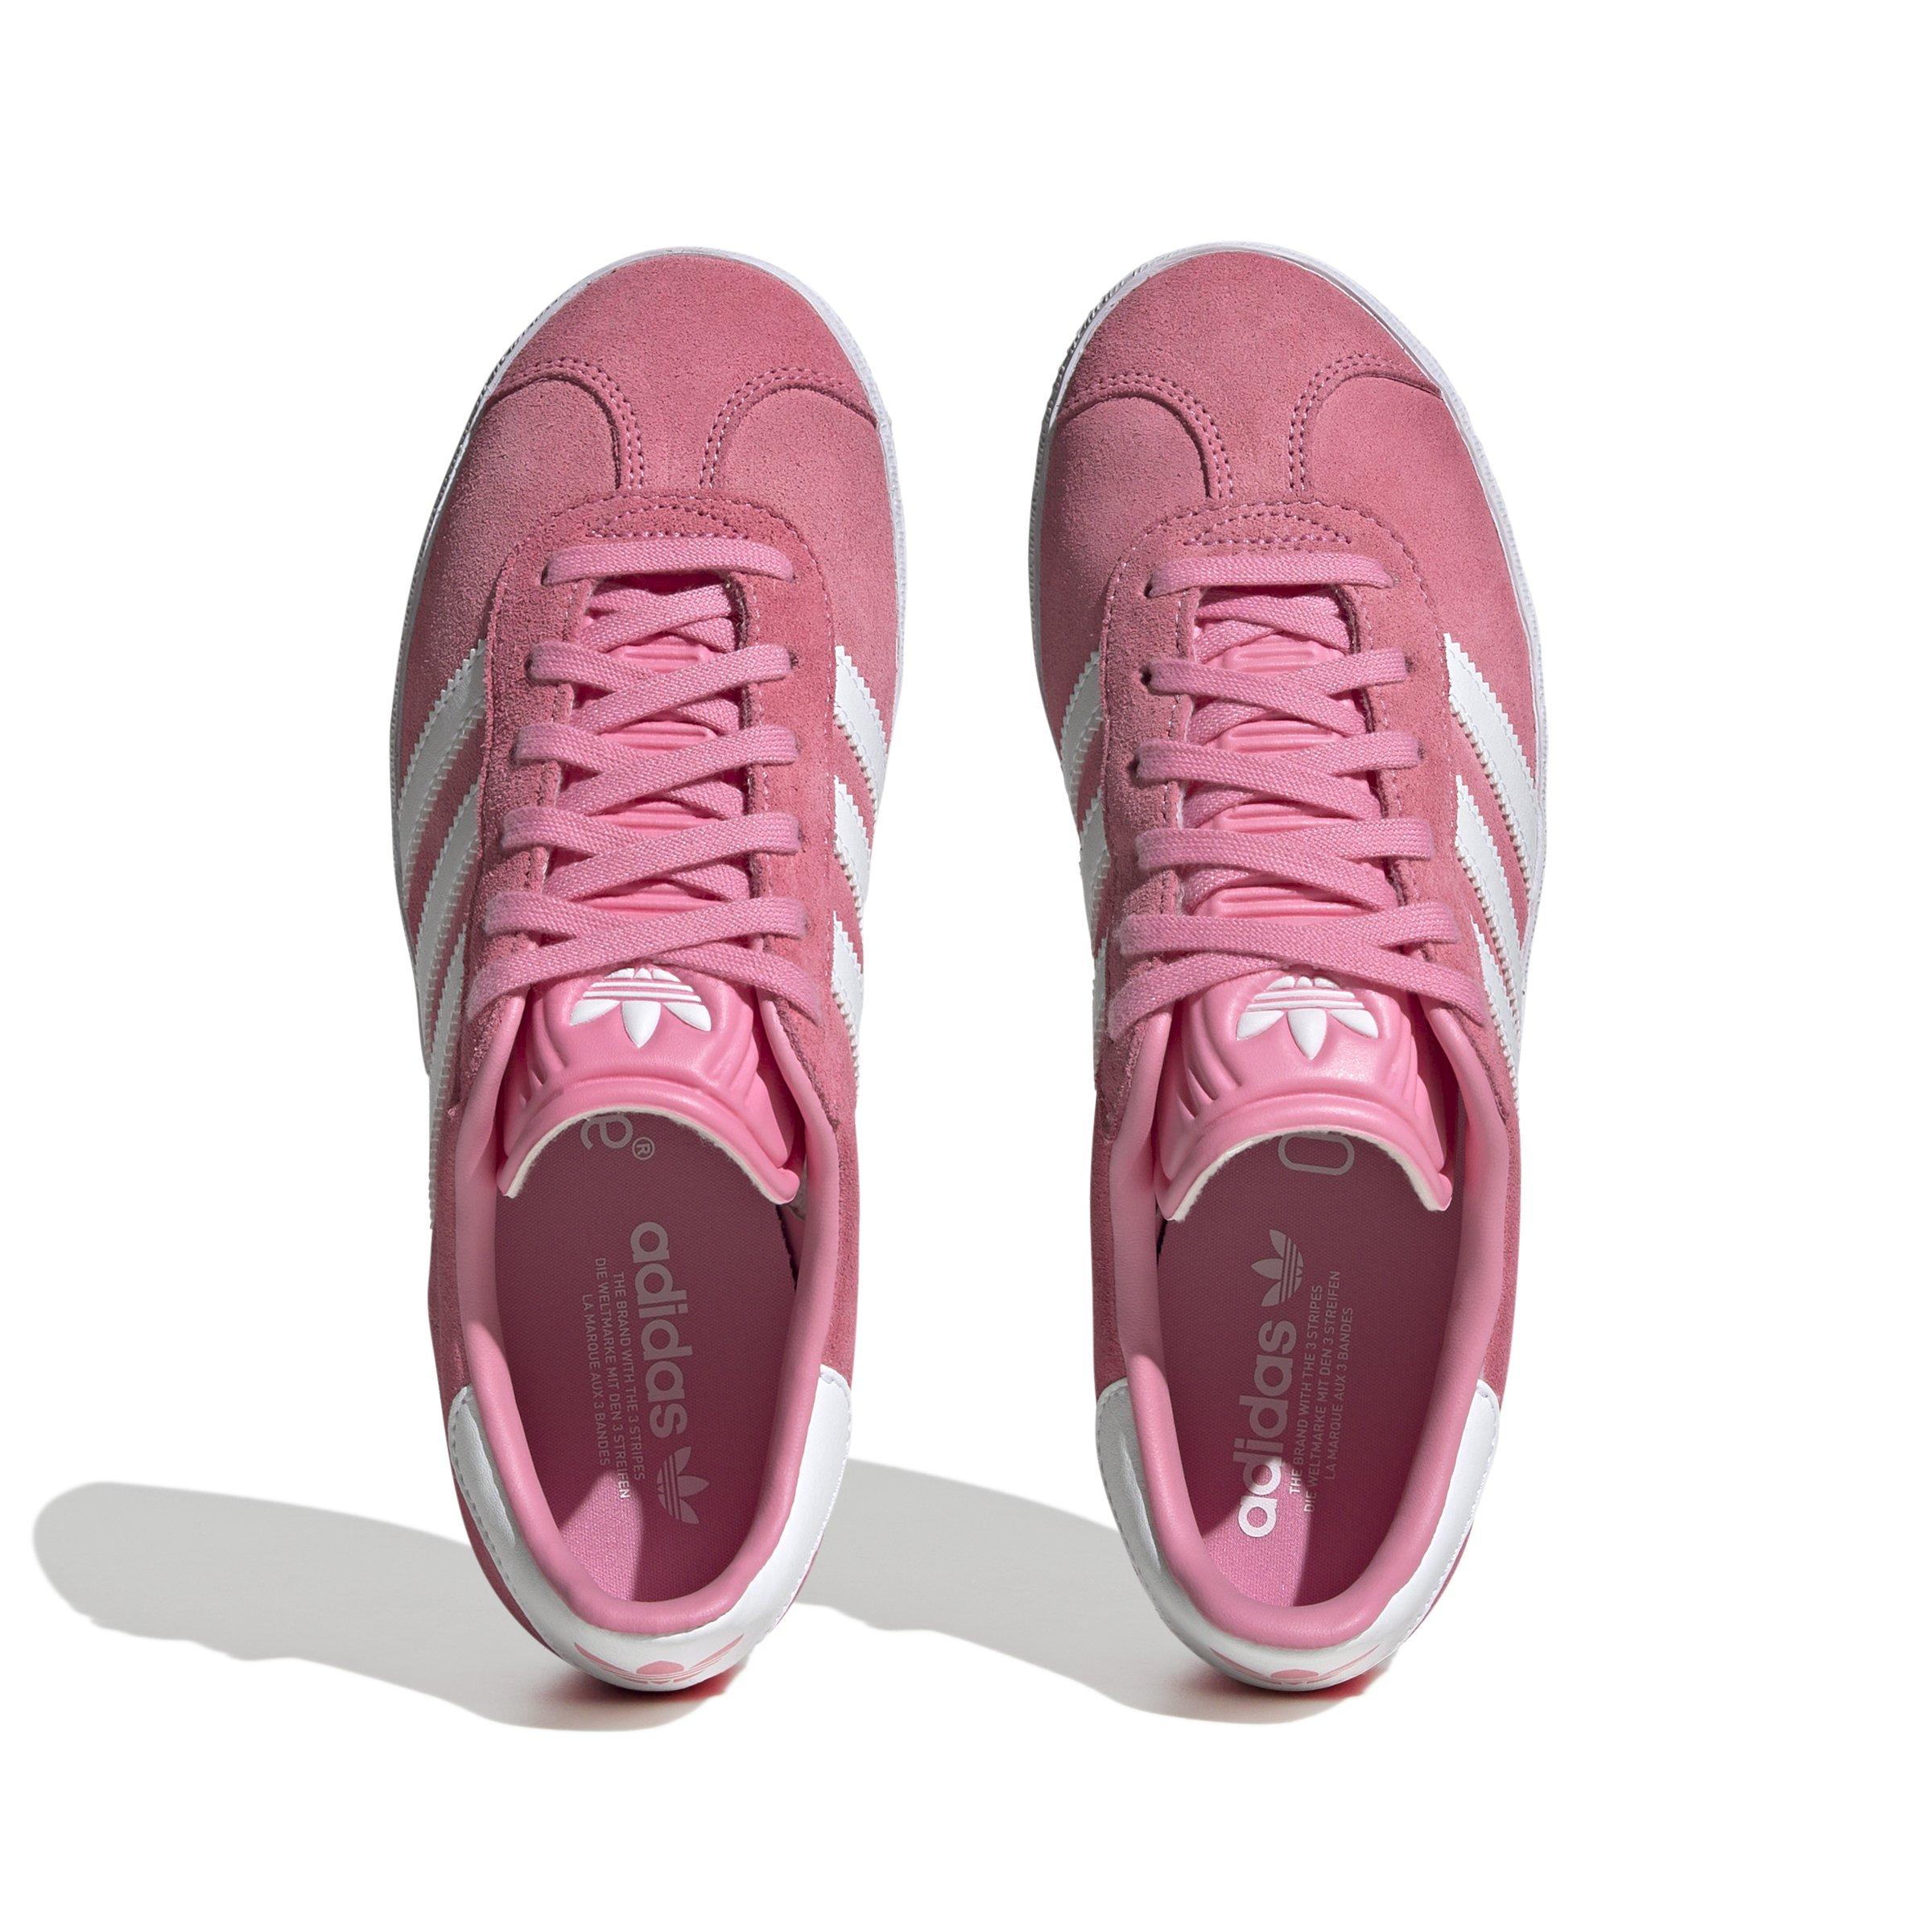 adidas gazelle youth pink